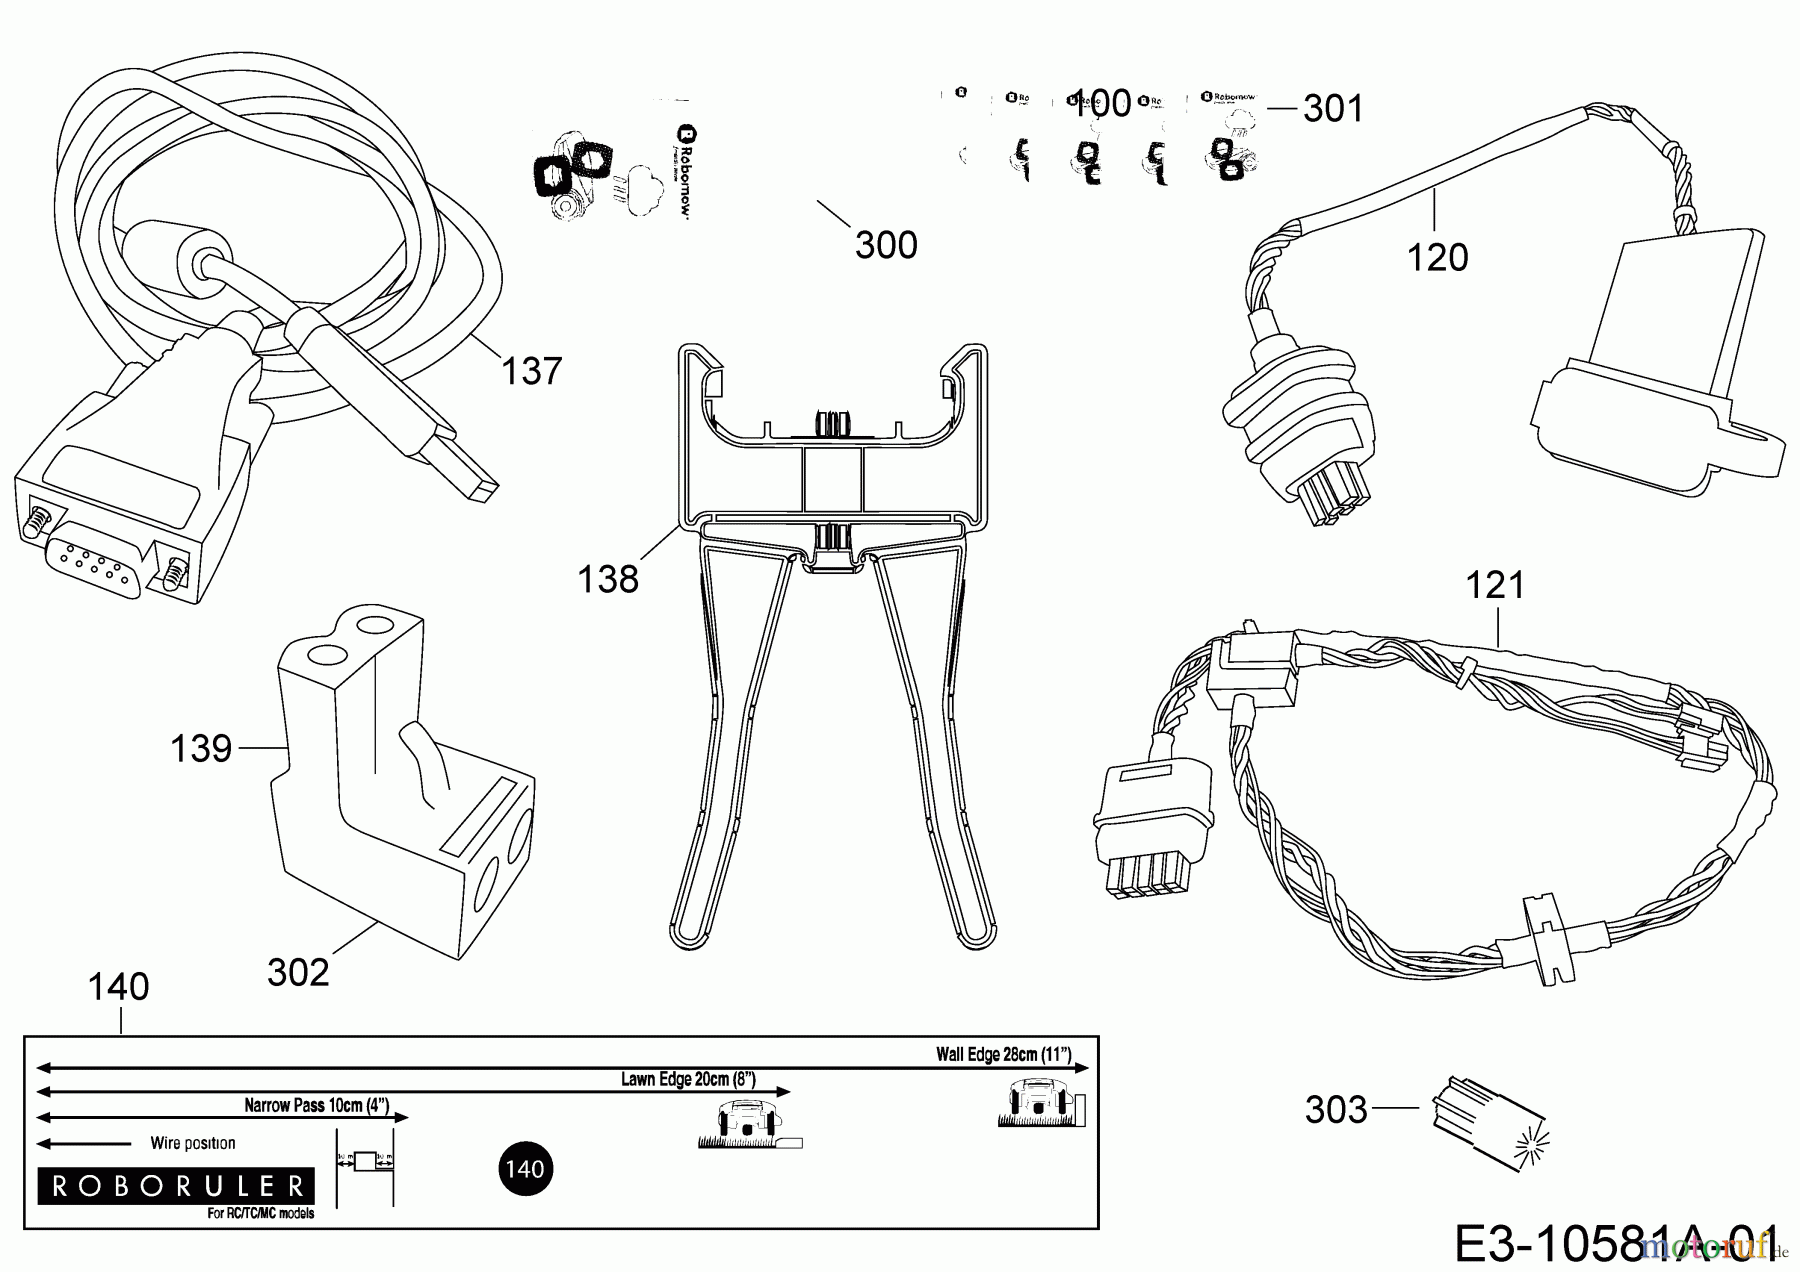  Robomow Mähroboter RC304 (White) PRD7004AW  (2014) Kabel, Kabelanschluß, Regensensor, Werkzeug